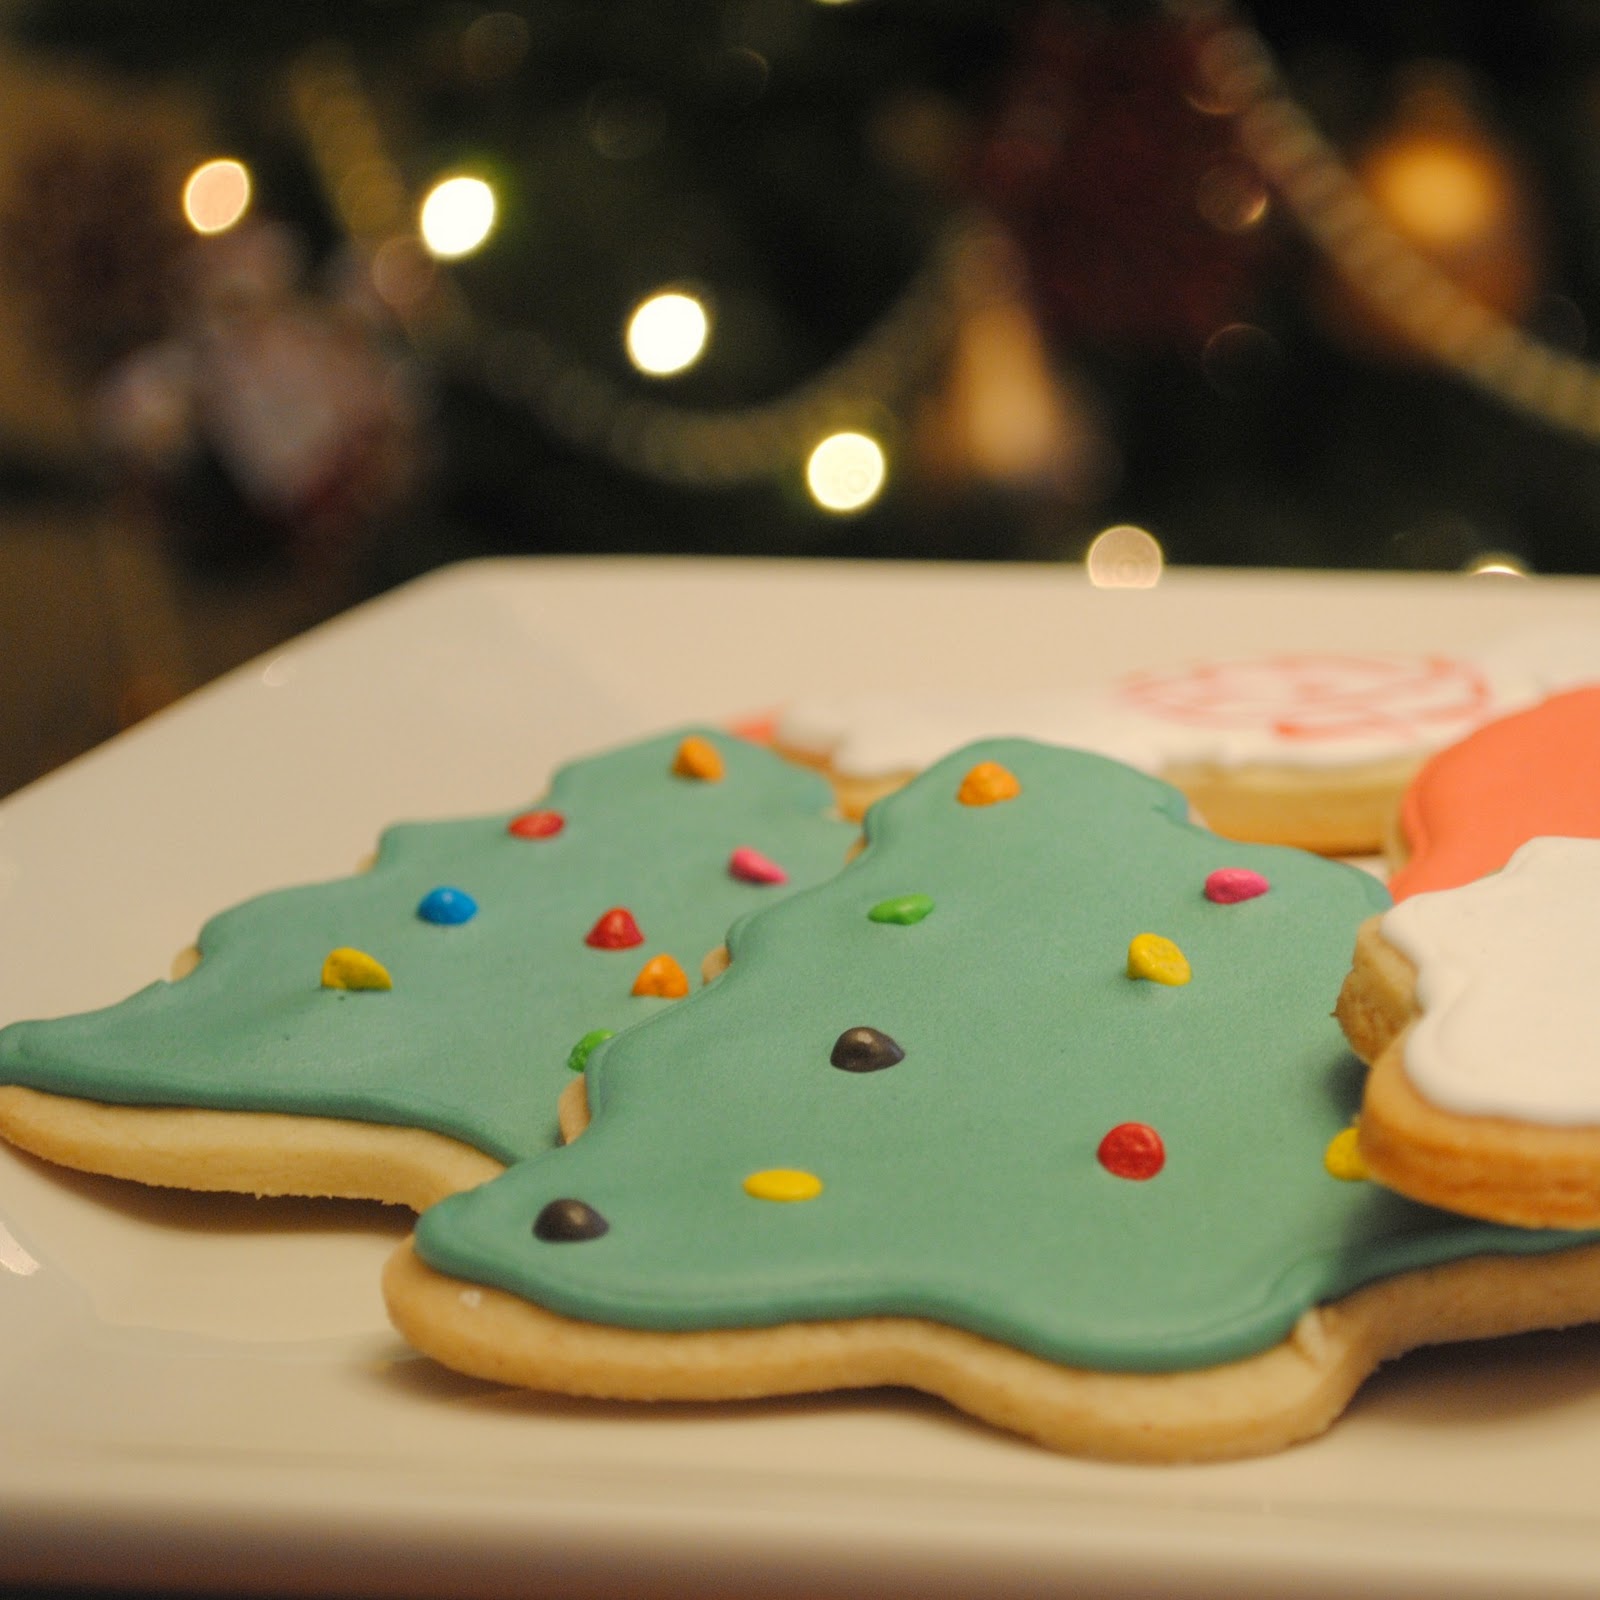 Homemade By Holman: Spiced Brown Sugar Christmas Cookies